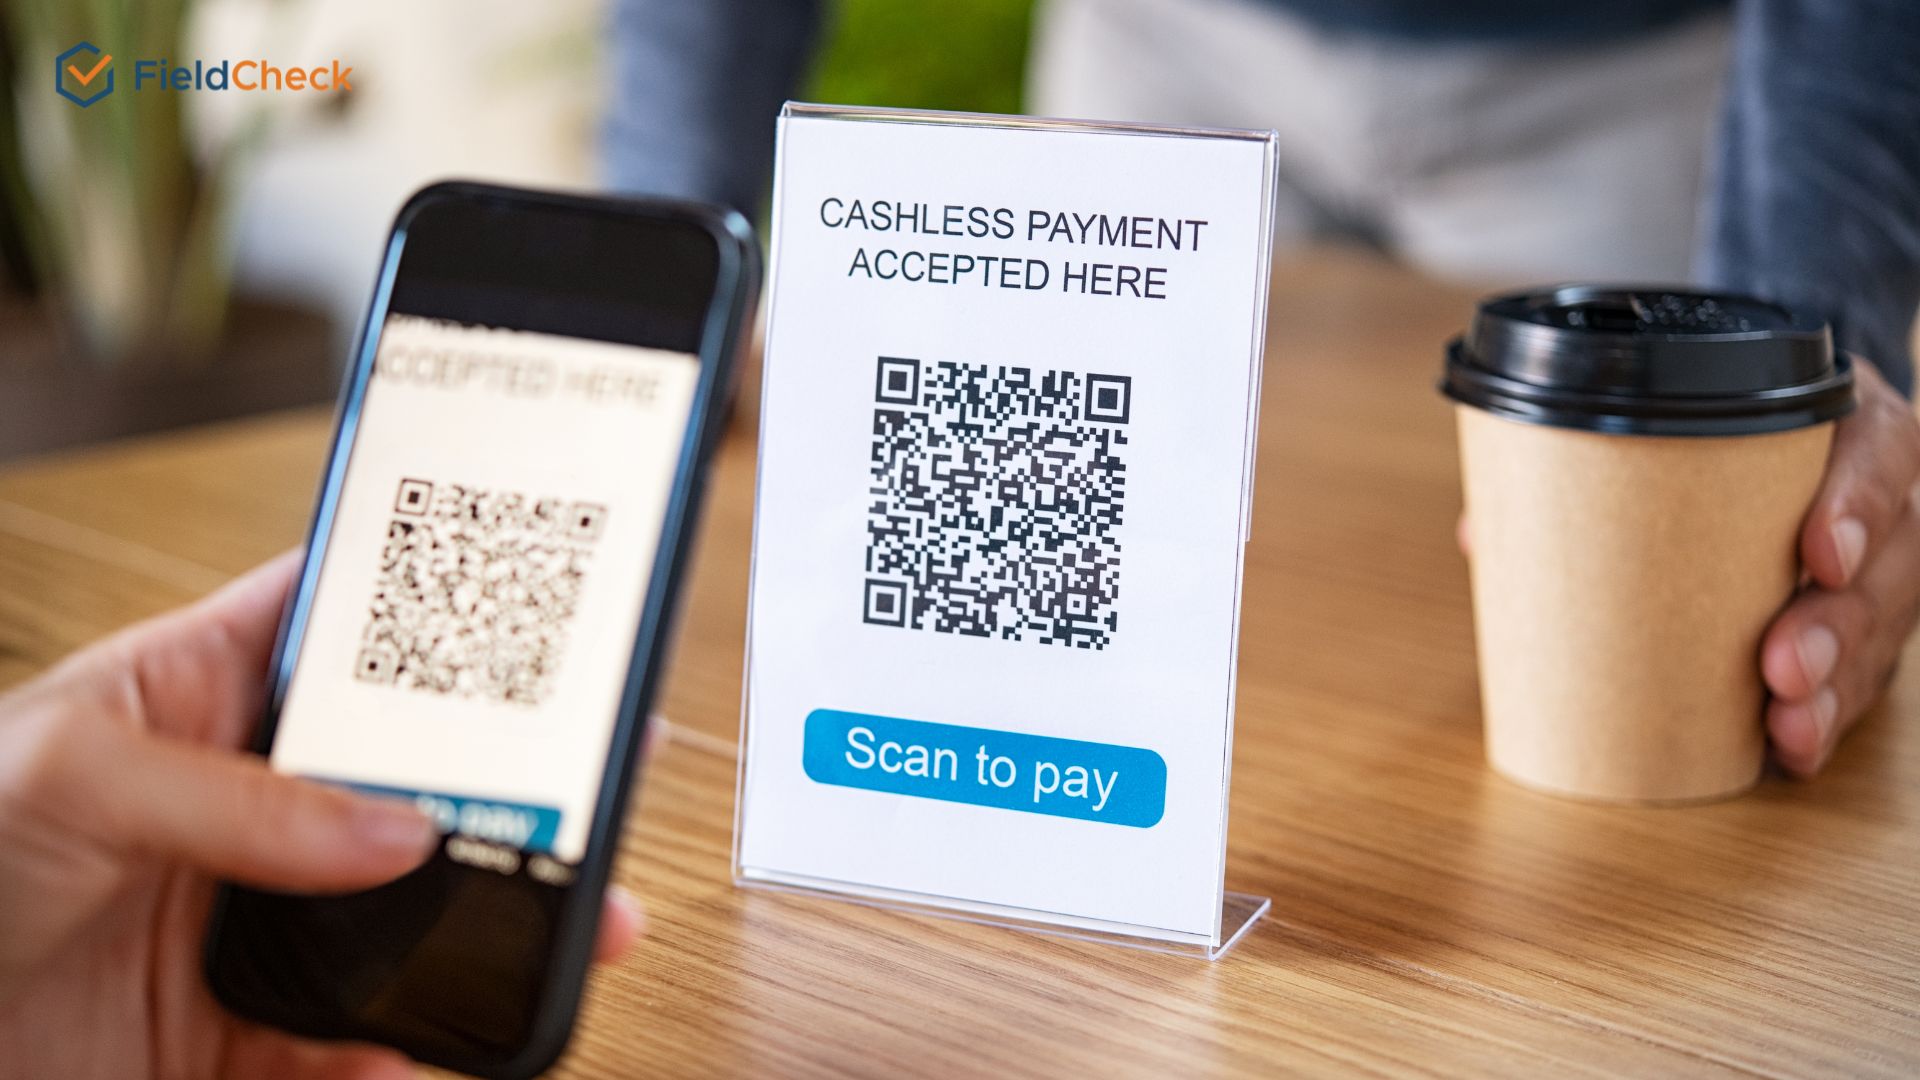 digital payment